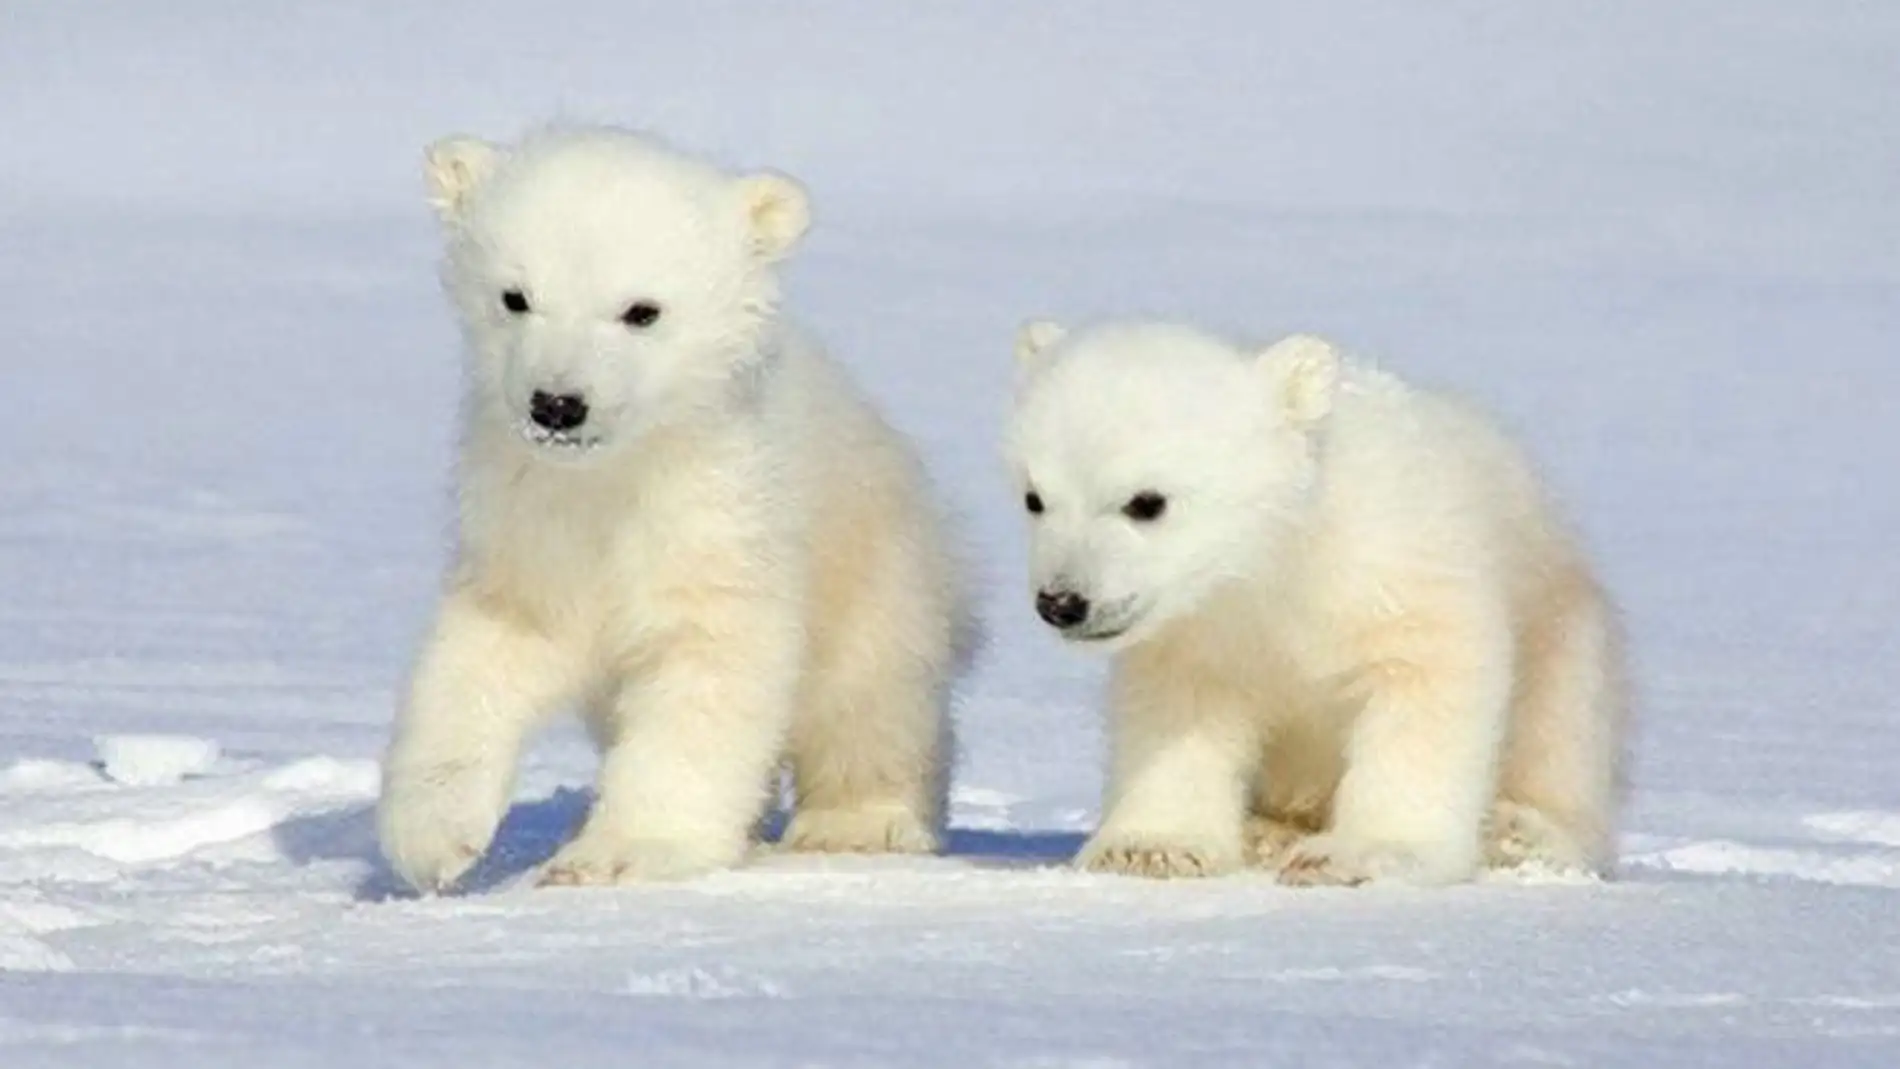 Encuentran por primera vez dos osos polares idénticos